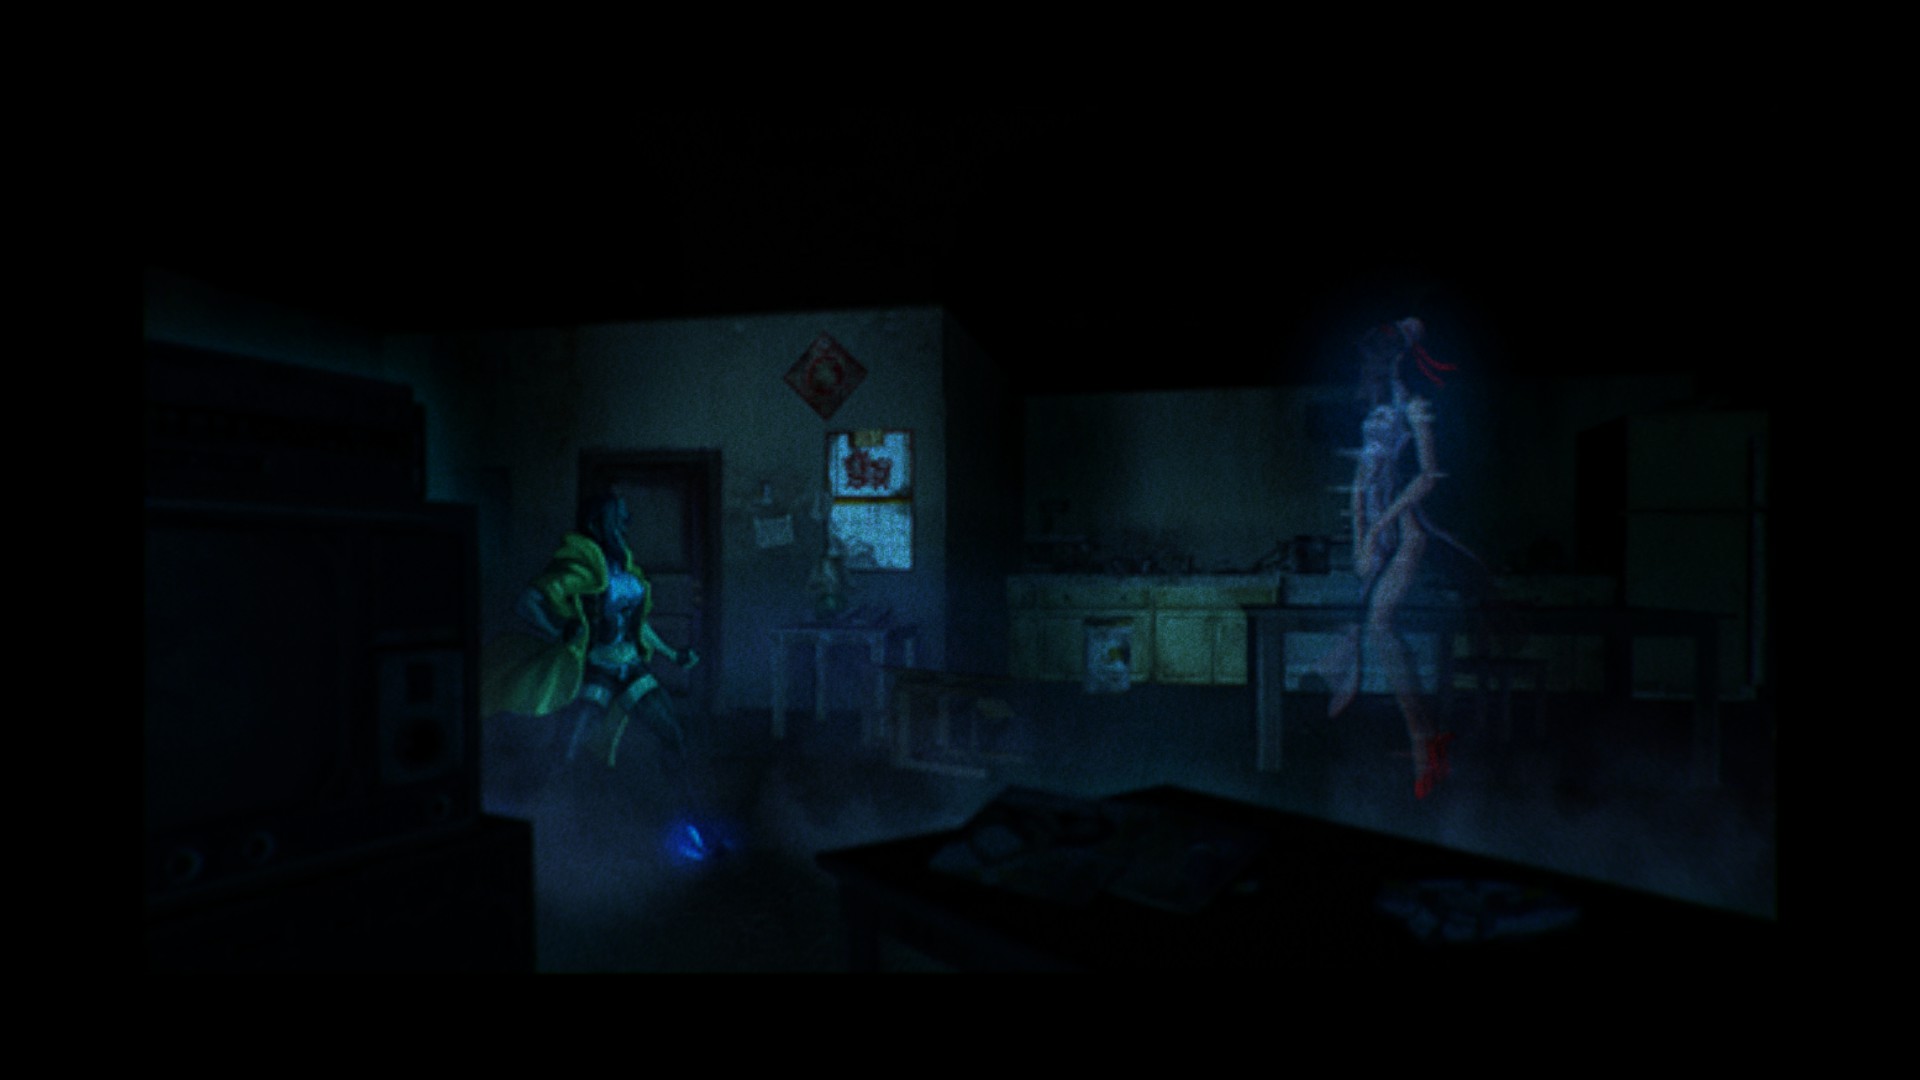 Sense - 不祥的预感: A Cyberpunk Ghost Story Review